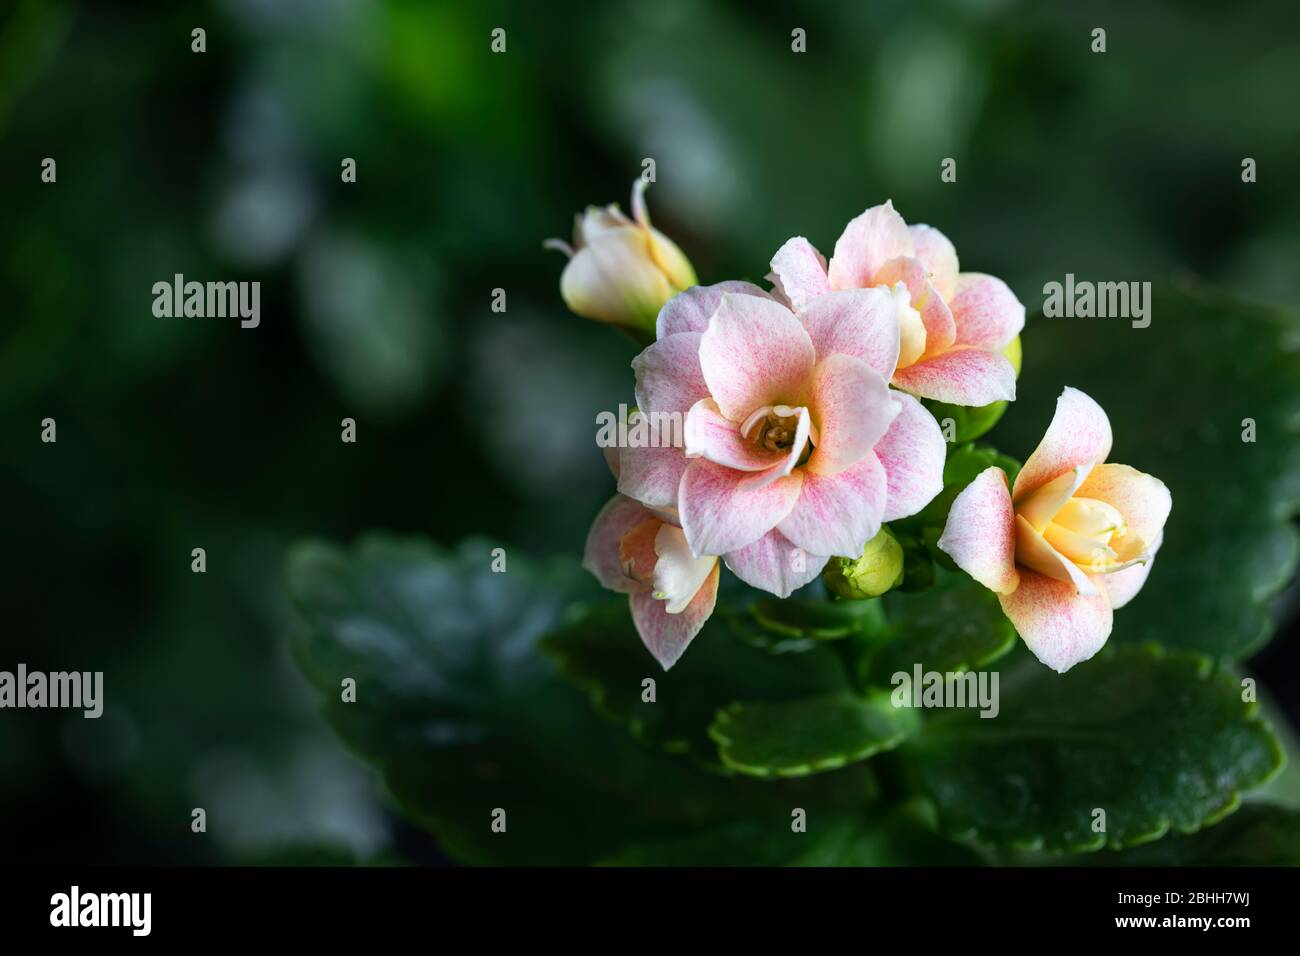 Flowers of decorative pink kalanchoe. Houseplants. Close-up. Blurred background. Stock Photo